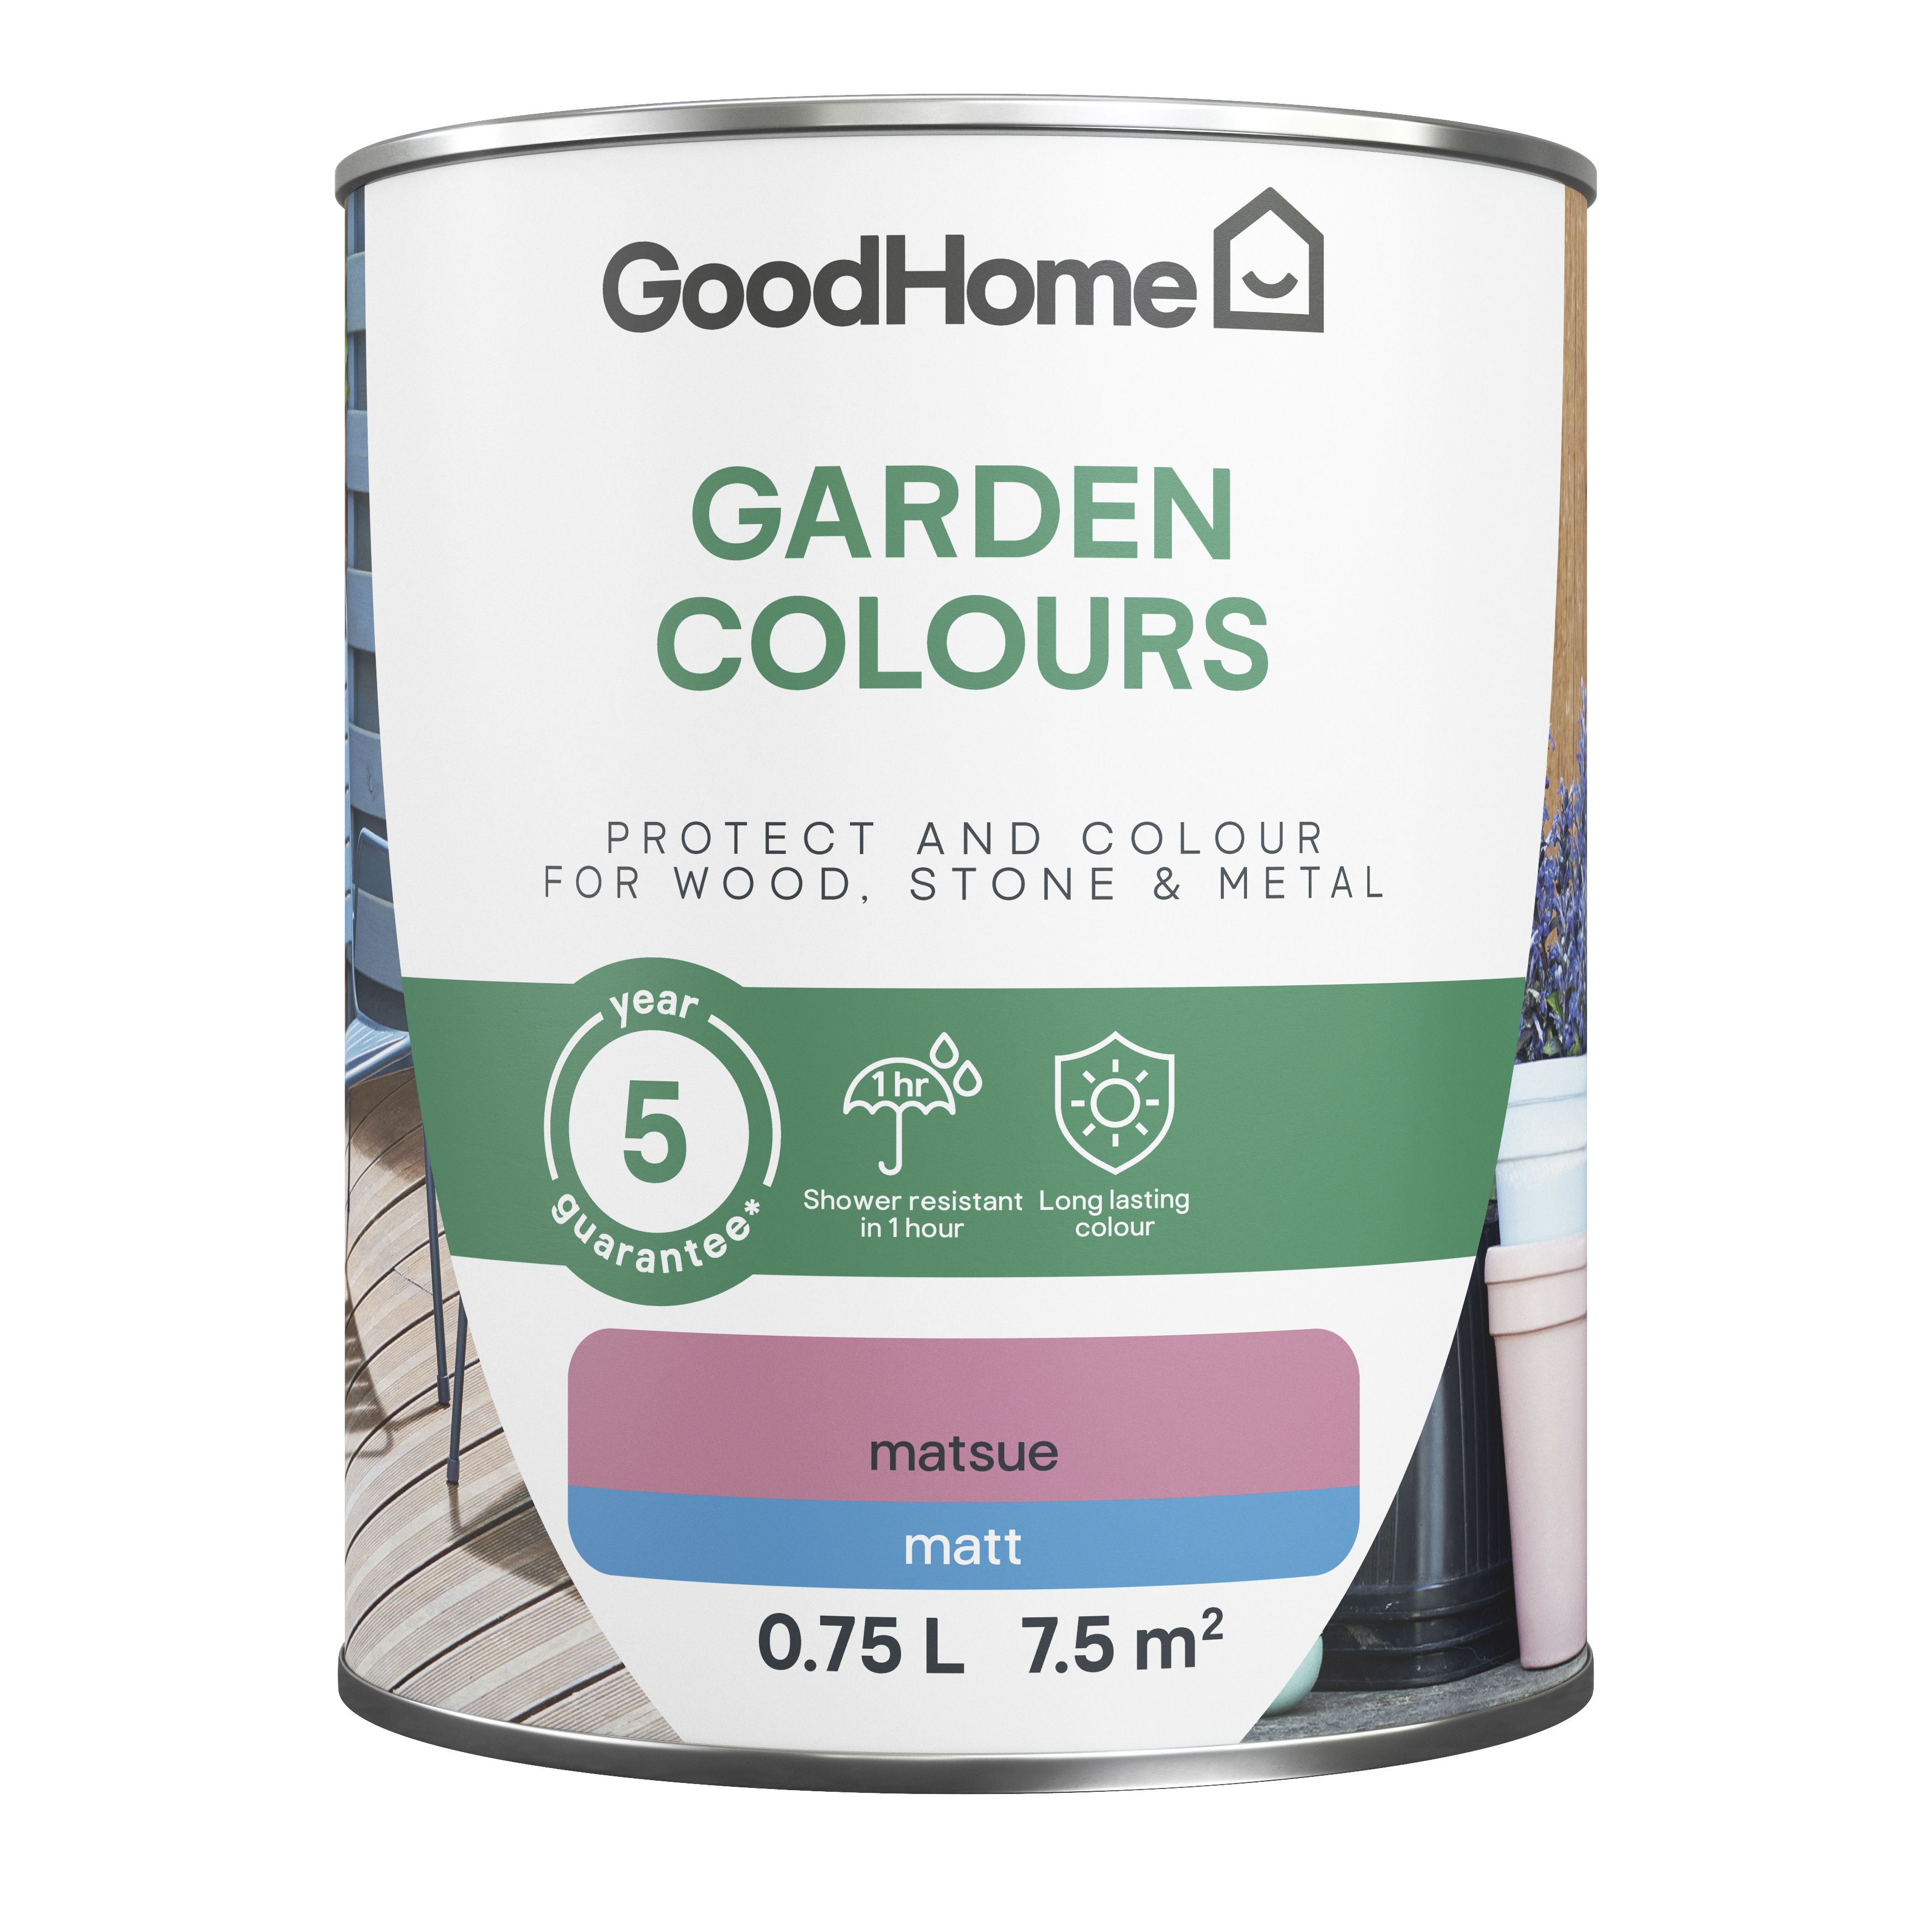 GoodHome Colour It Matsue Matt Multi-surface paint, 750ml